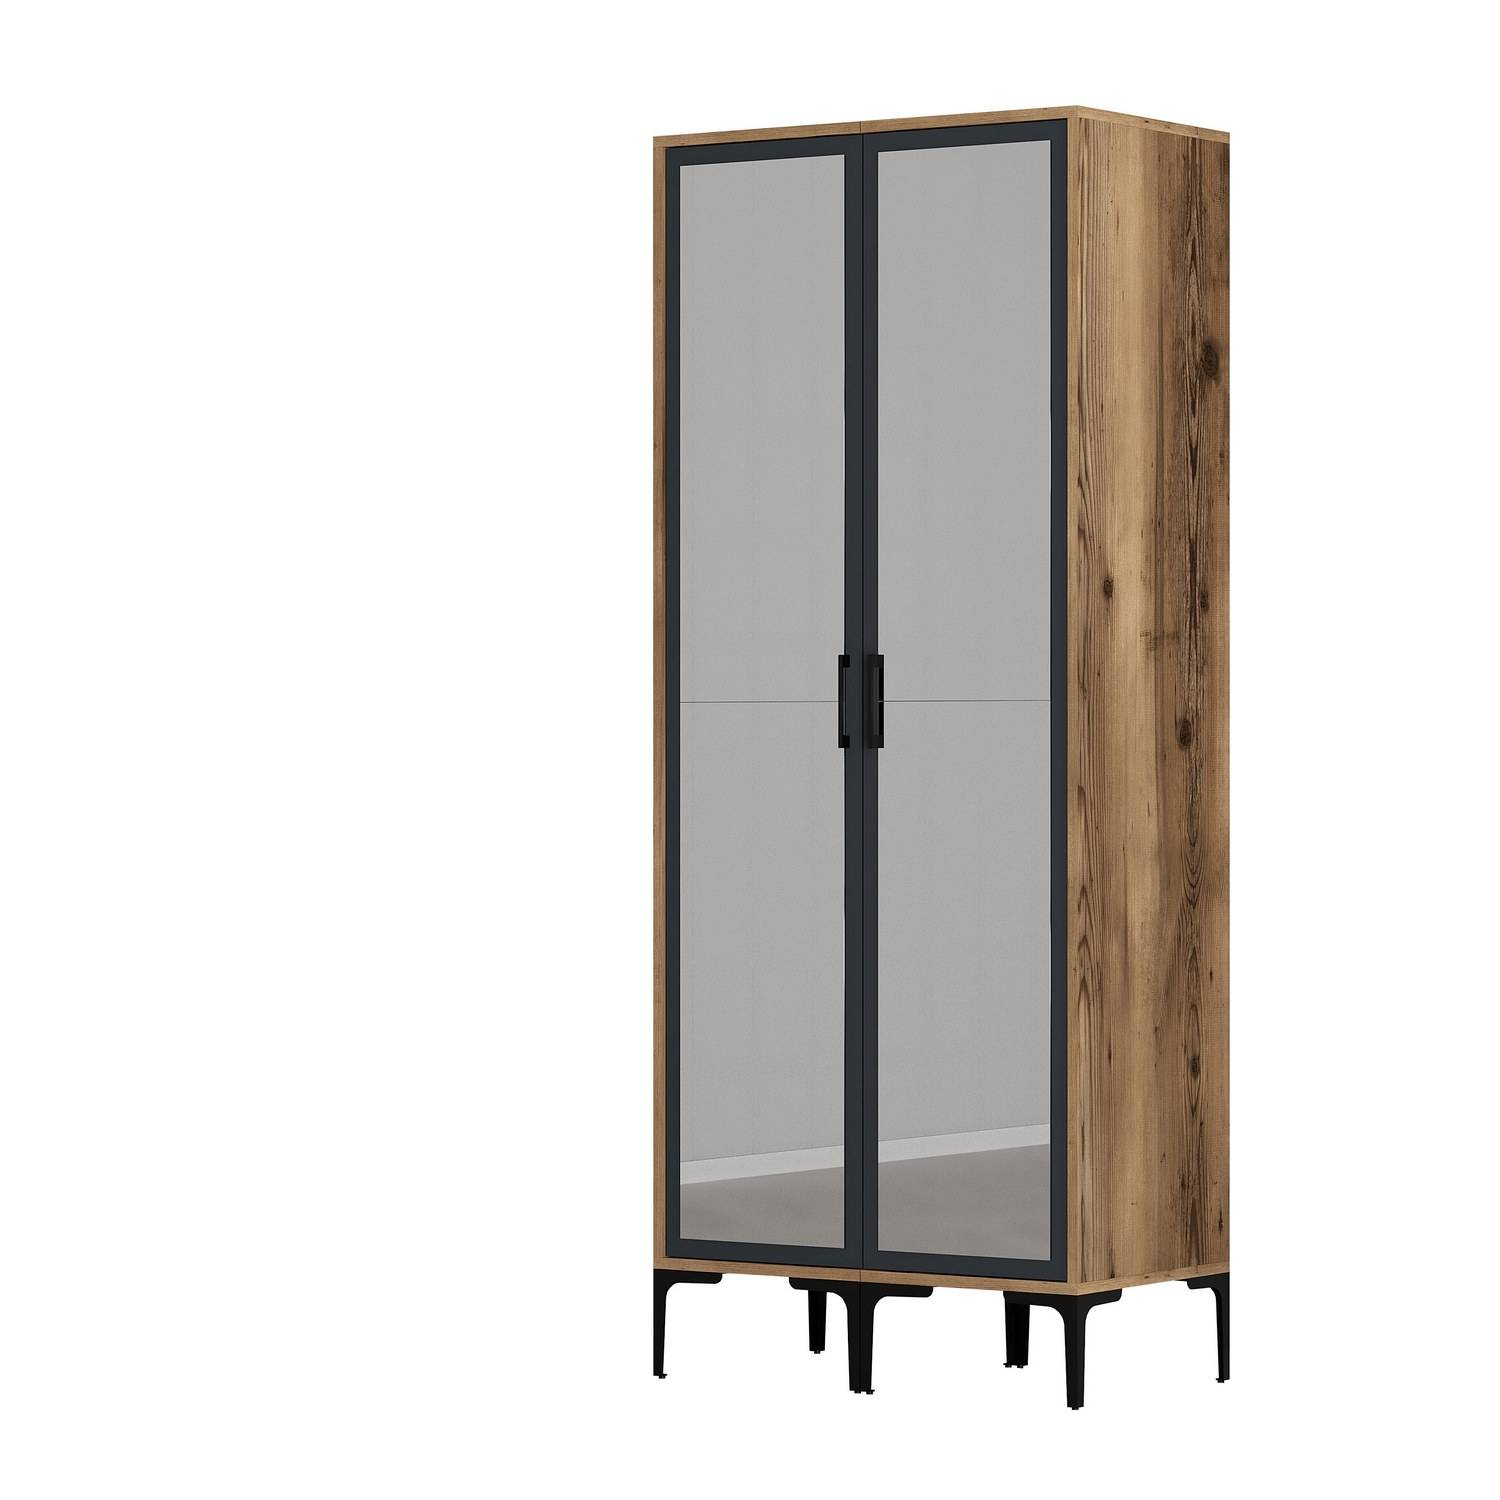 2-deurs kledingkast met spiegel in industriële stijl Akoy L80cm Donker hout en antraciet